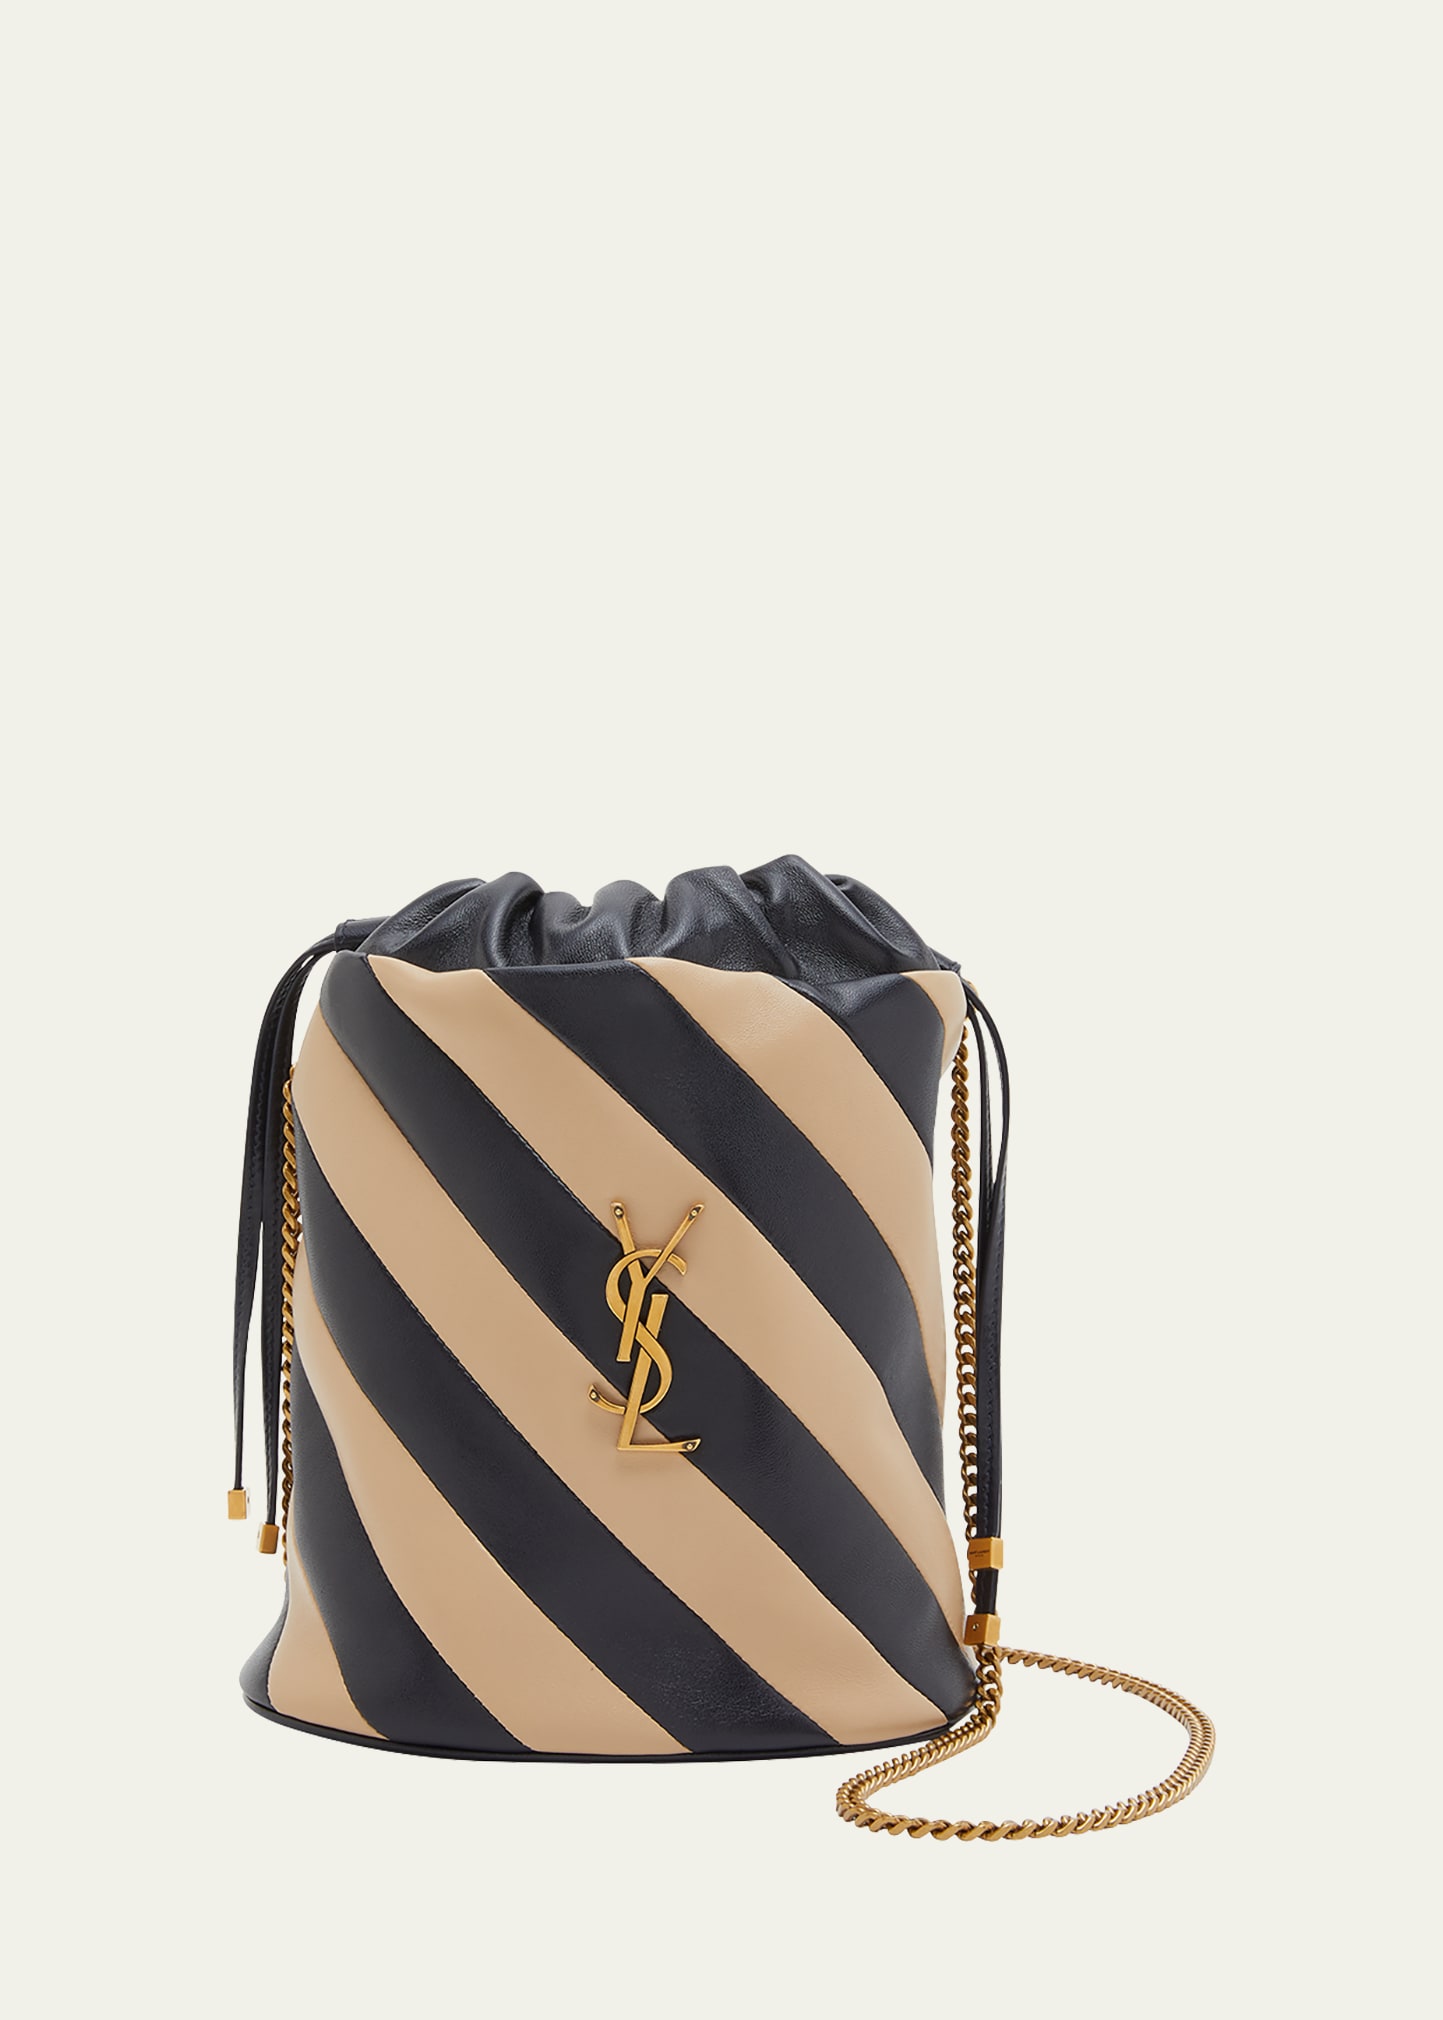 Saint Laurent Alix YSL Bucket Bag in Smooth Leather | Bergdorf Goodman